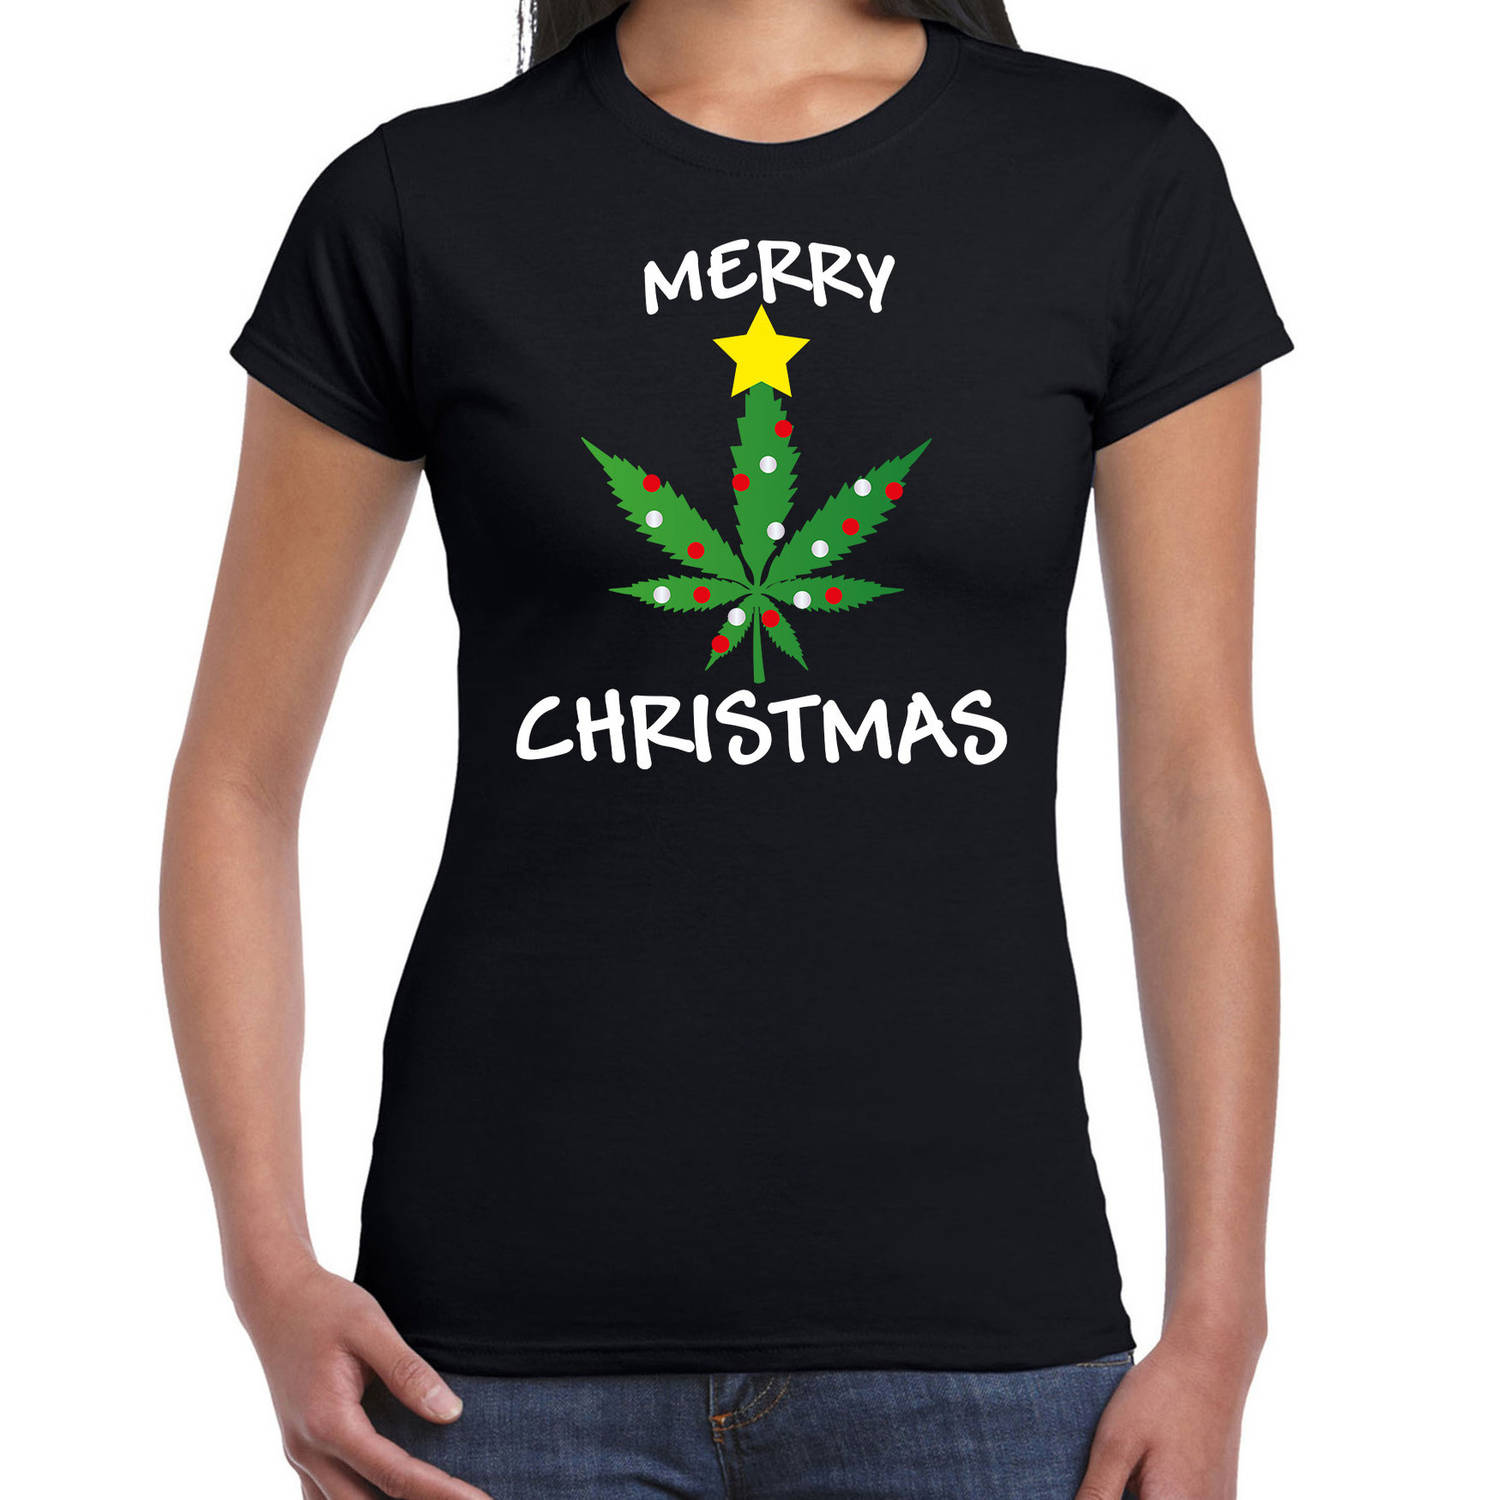 Foute humor Kerst T-shirt wiet voor dames zwart XL - kerst t-shirts